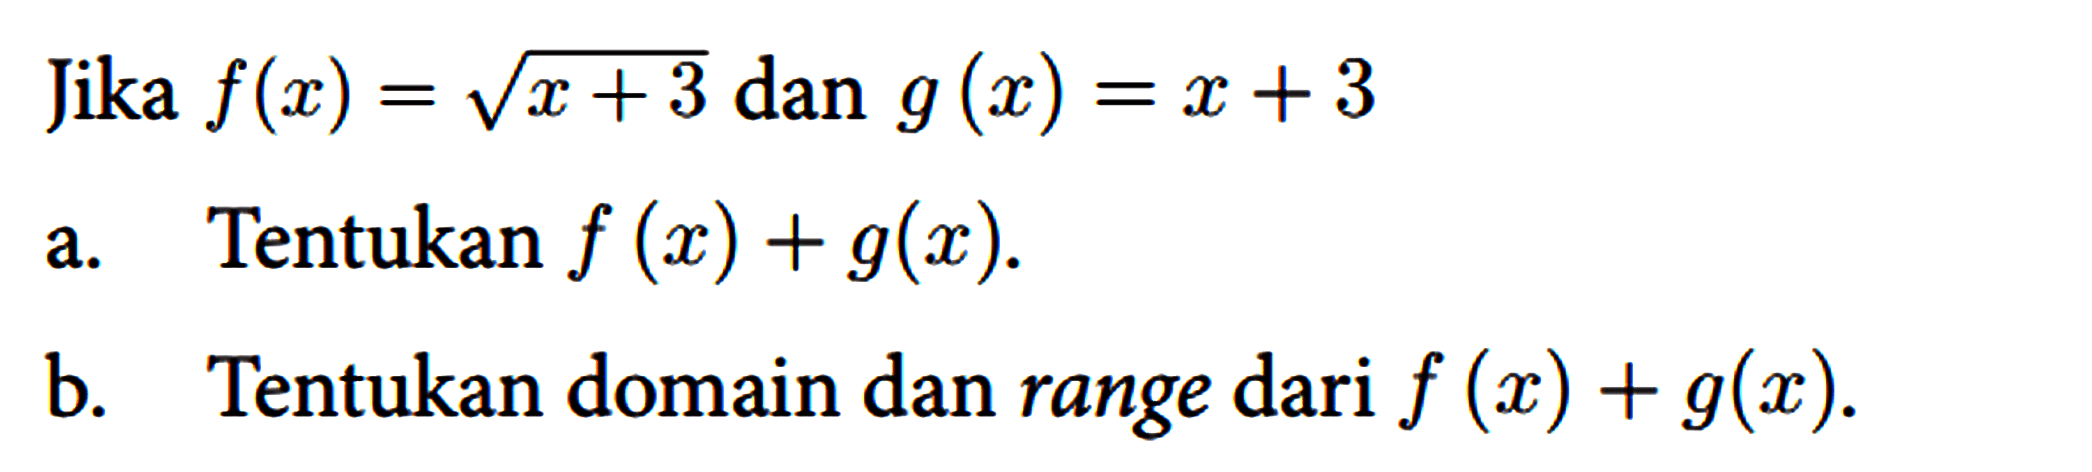 Jika f(x)=akar(x+3) dan g(x)=x+3 
 a. Tentukan f(x)+g(x) .
 b. Tentukan domain dan range dari f(x)+g(x) .